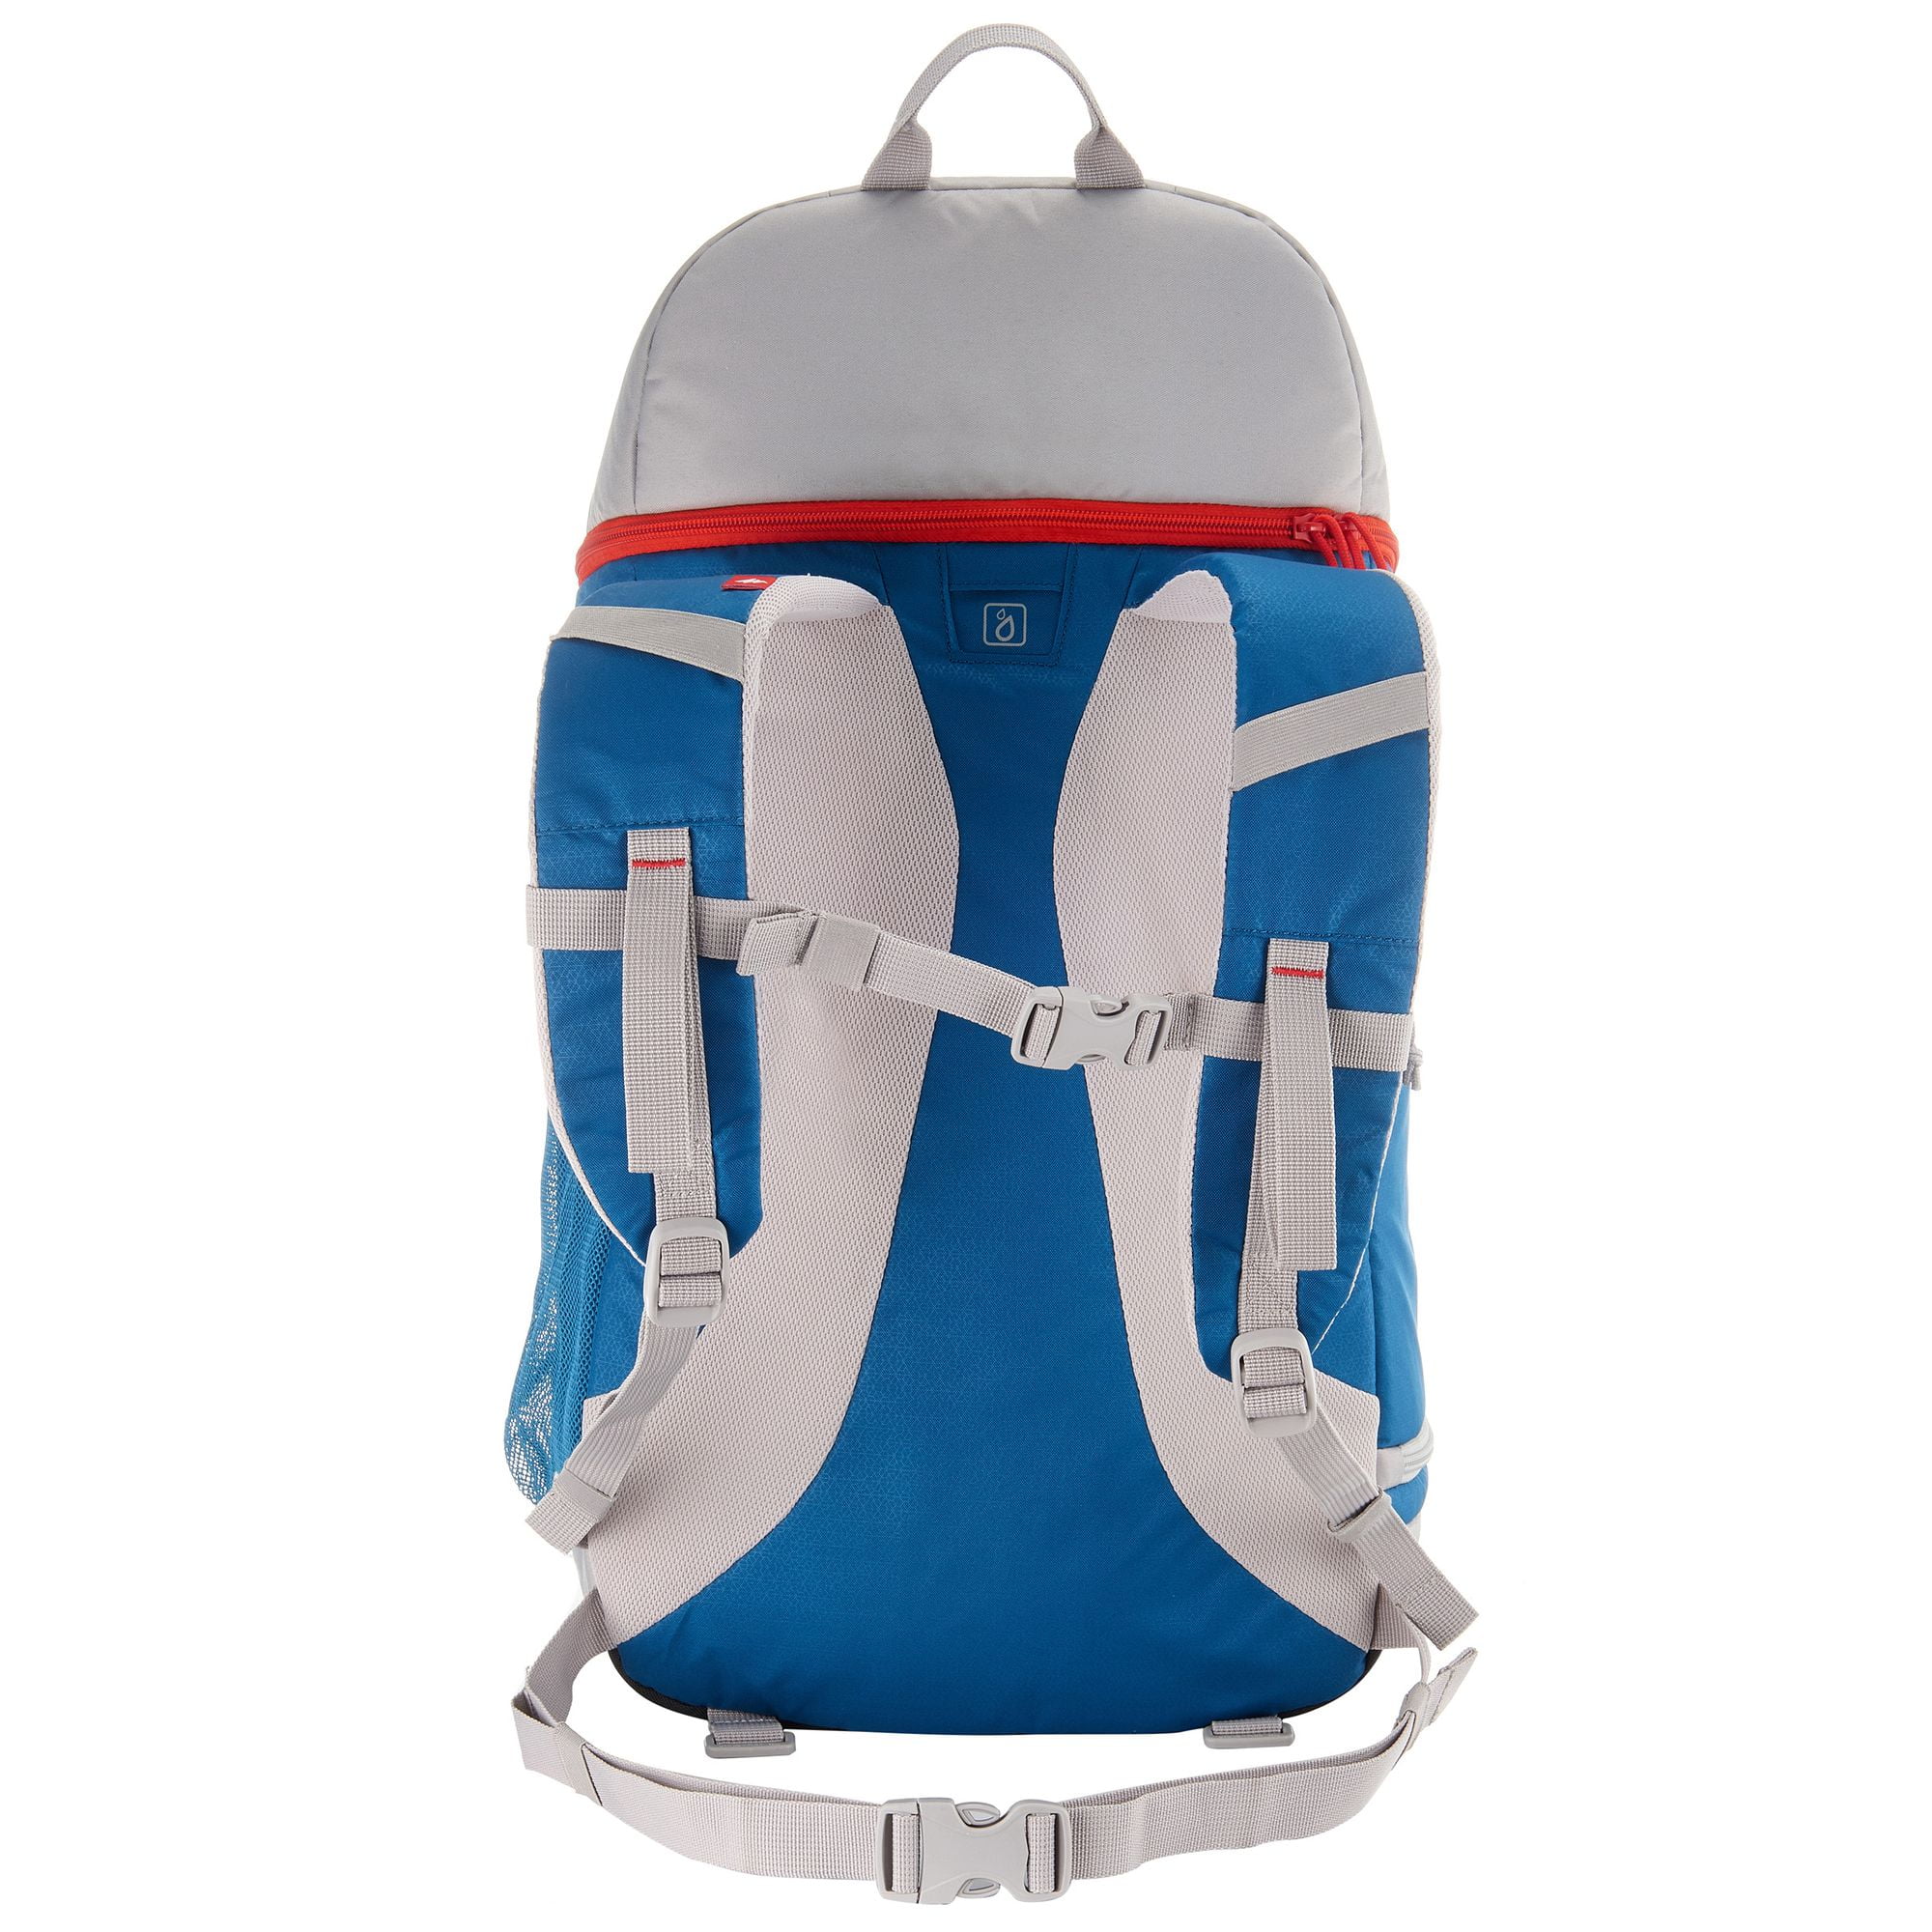 QUECHUA by Decathlon Backpack Nh100 30L Light Blue 30 L Backpack Light Blue  - Price in India | Flipkart.com